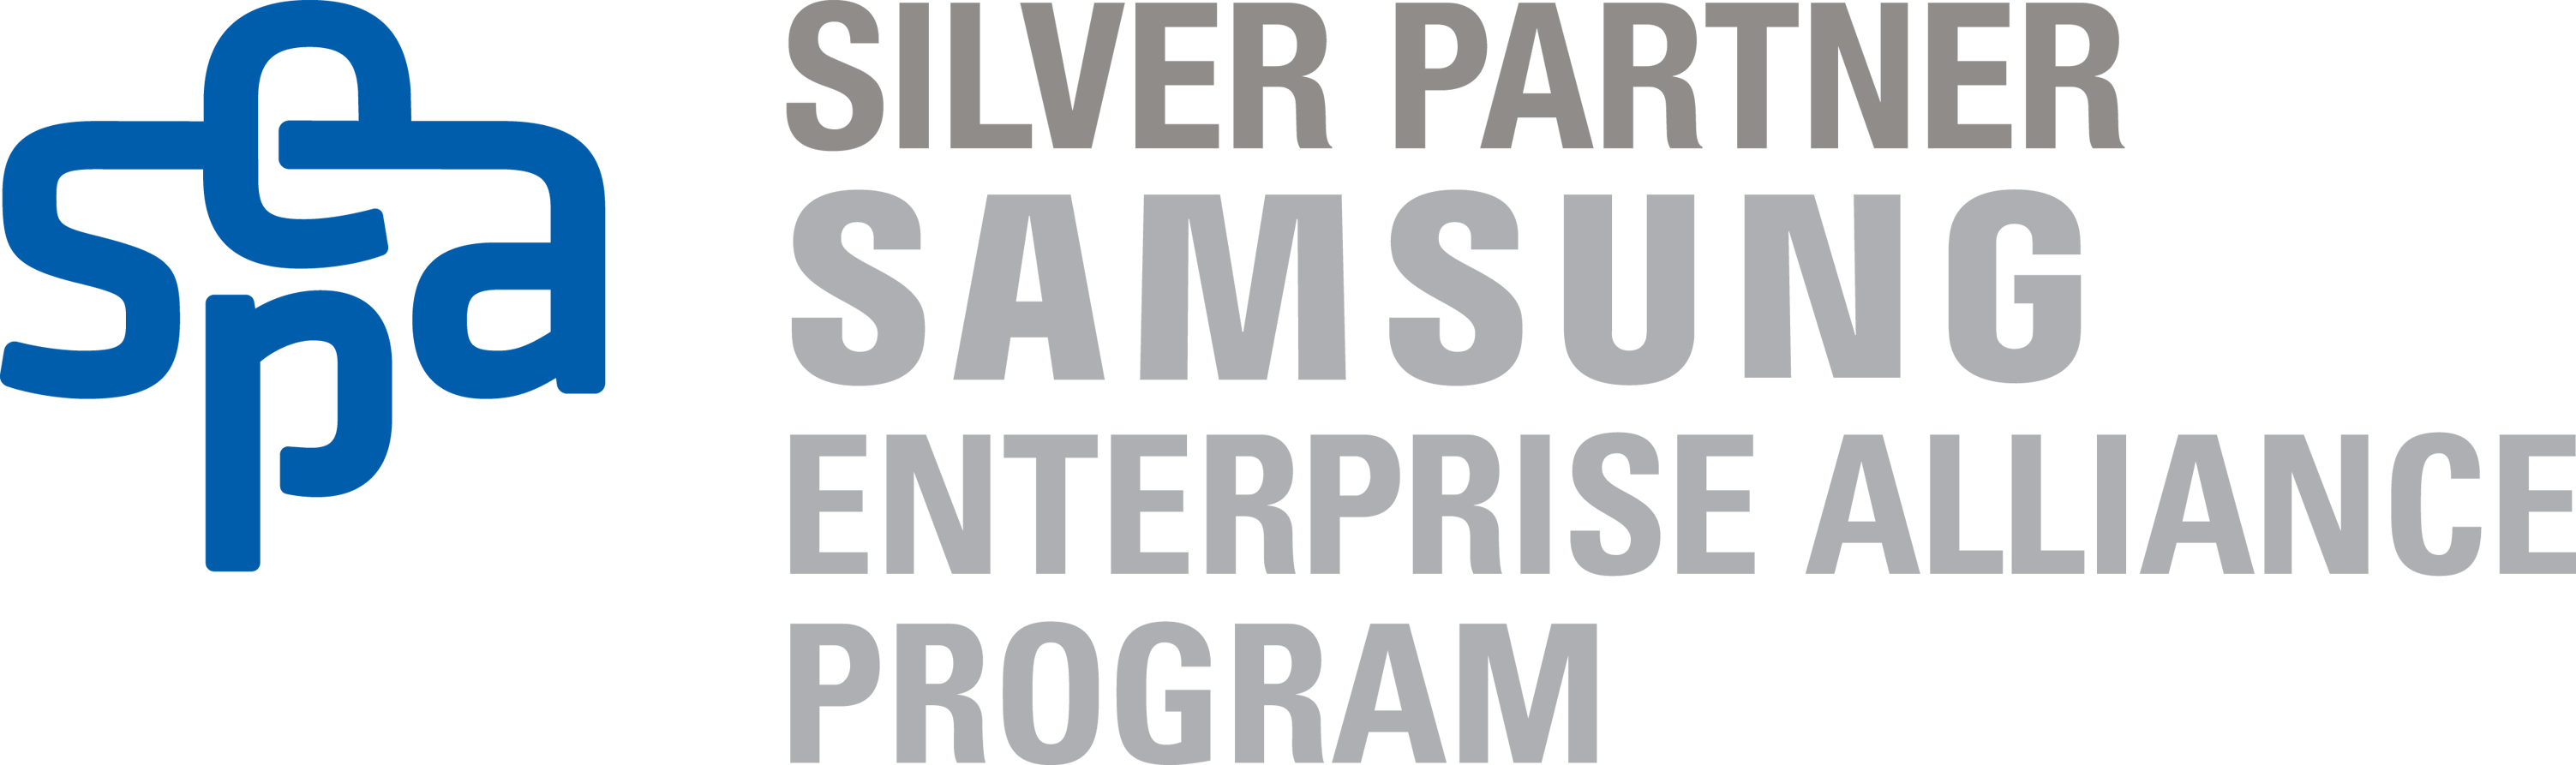 Samsung Enterprise Alliance Program - Silver Partner